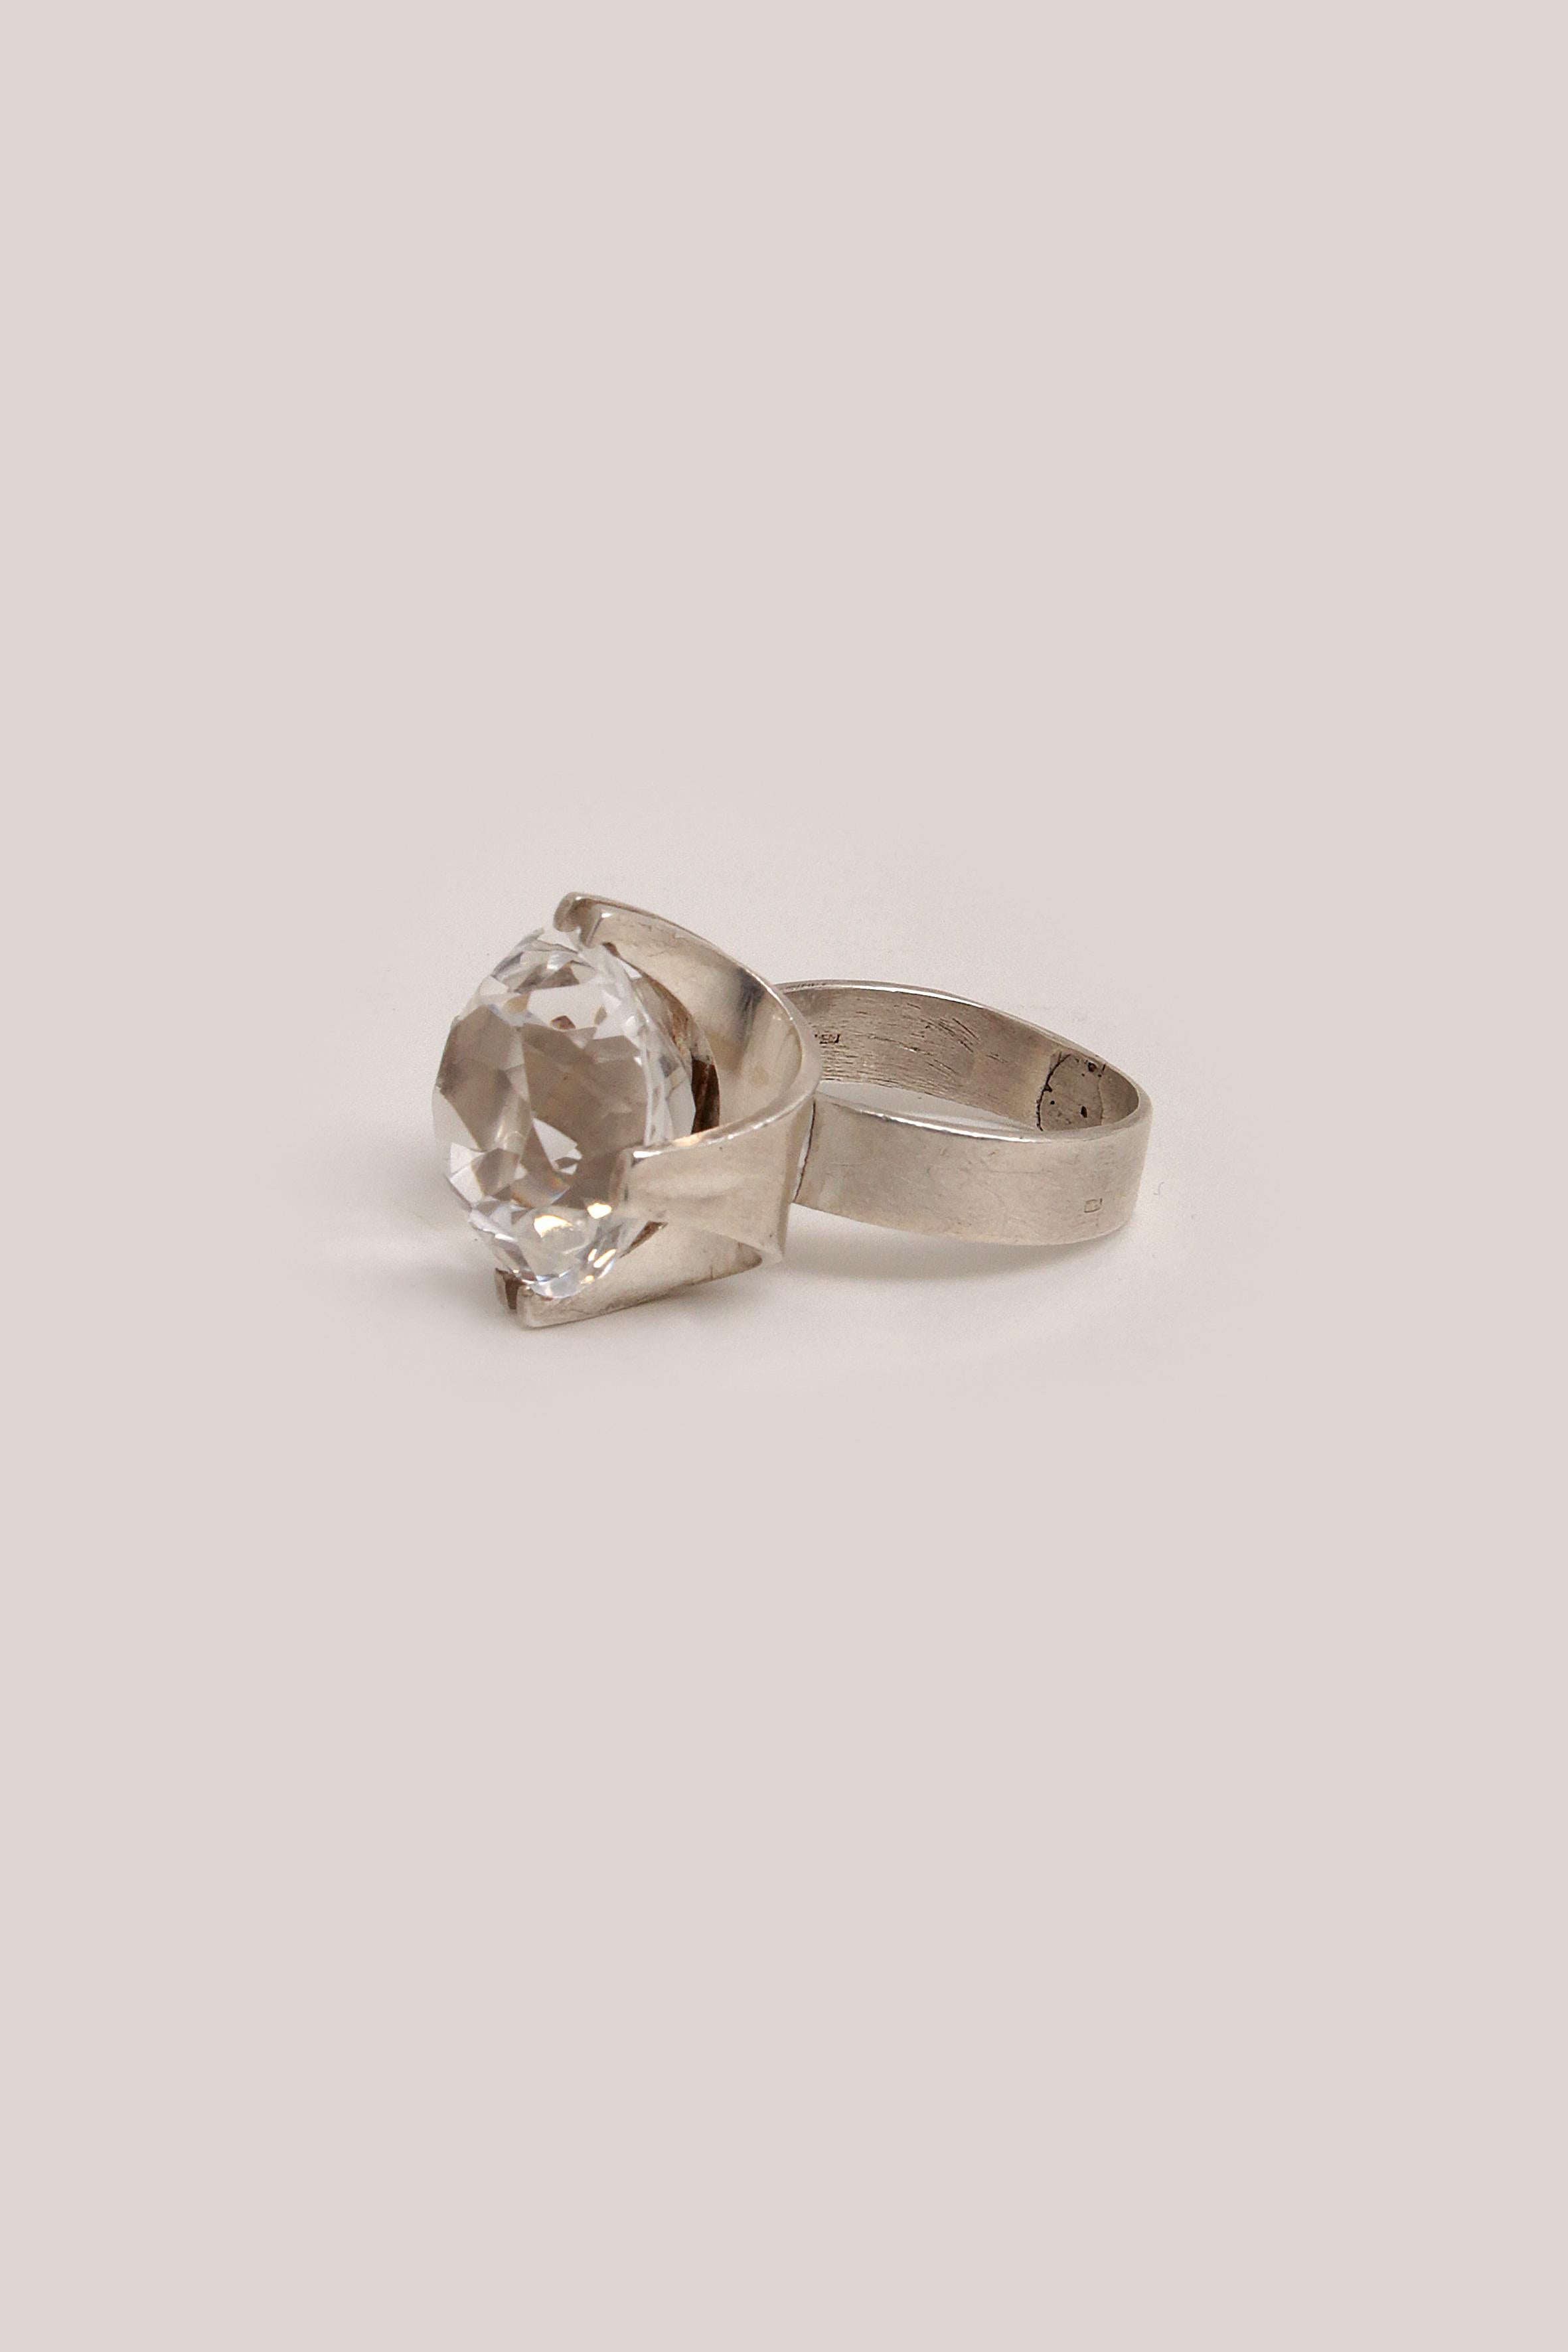 Silver ring with rock crystal design Ellis Kauppi, Finland 1975 For Sale 2